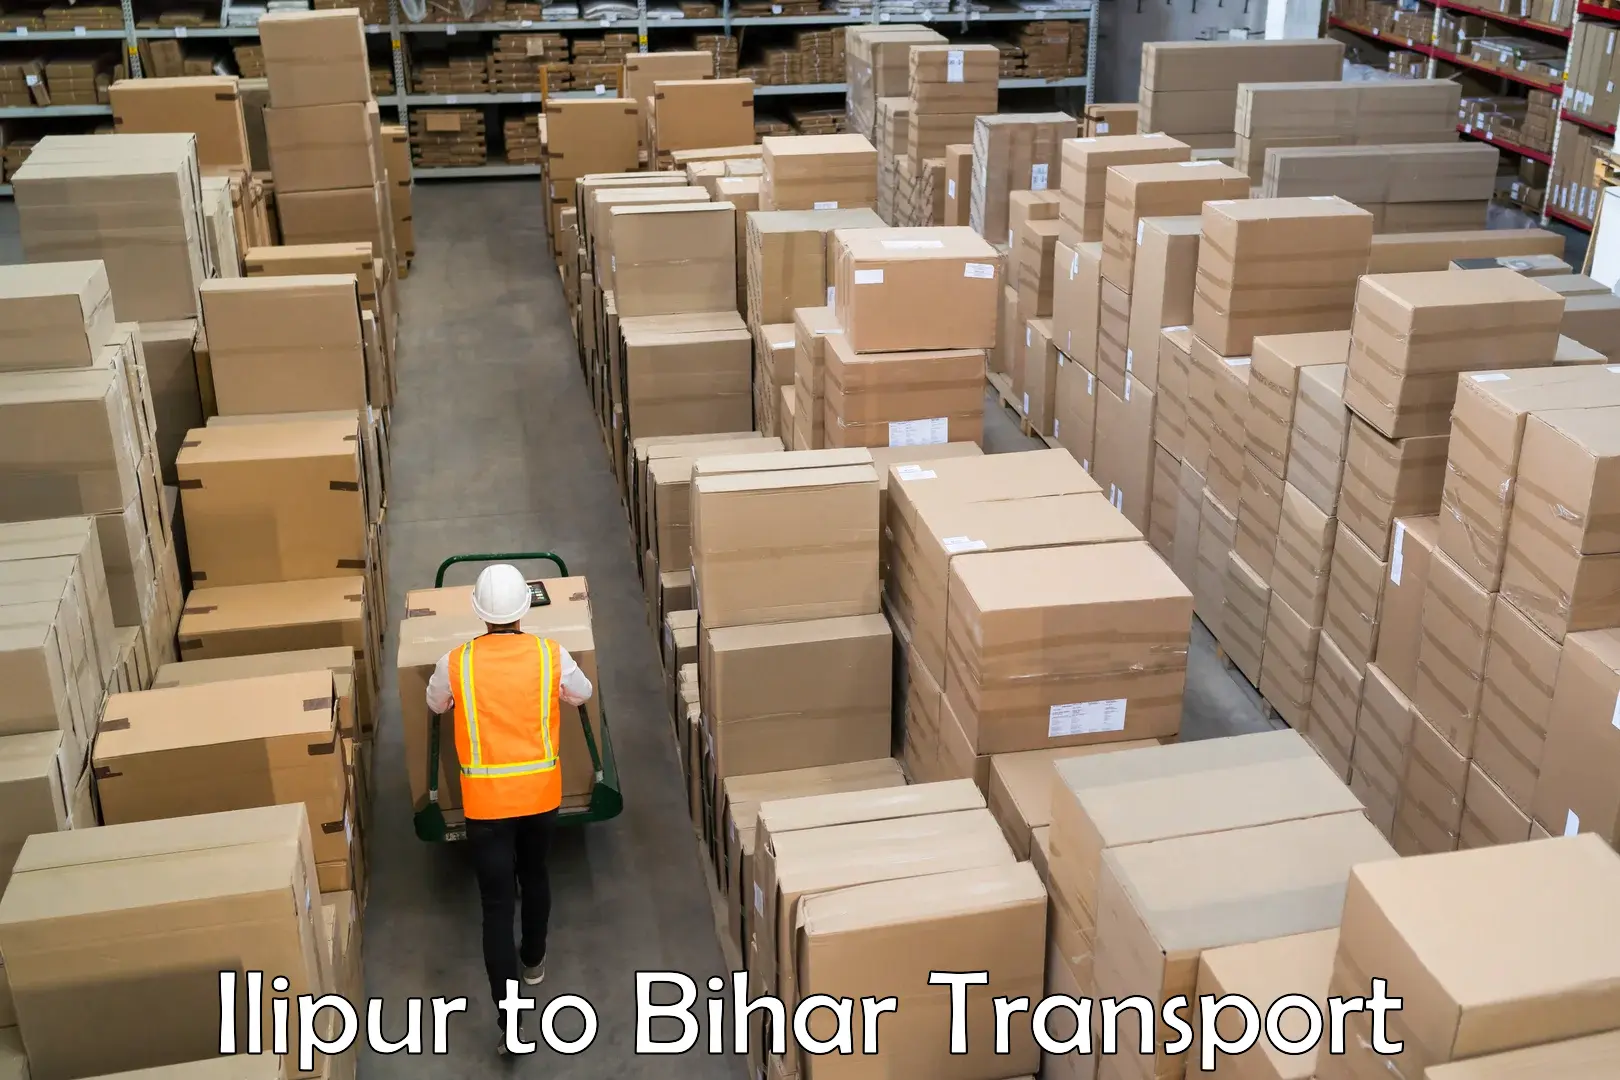 Container transport service Ilipur to Tekari